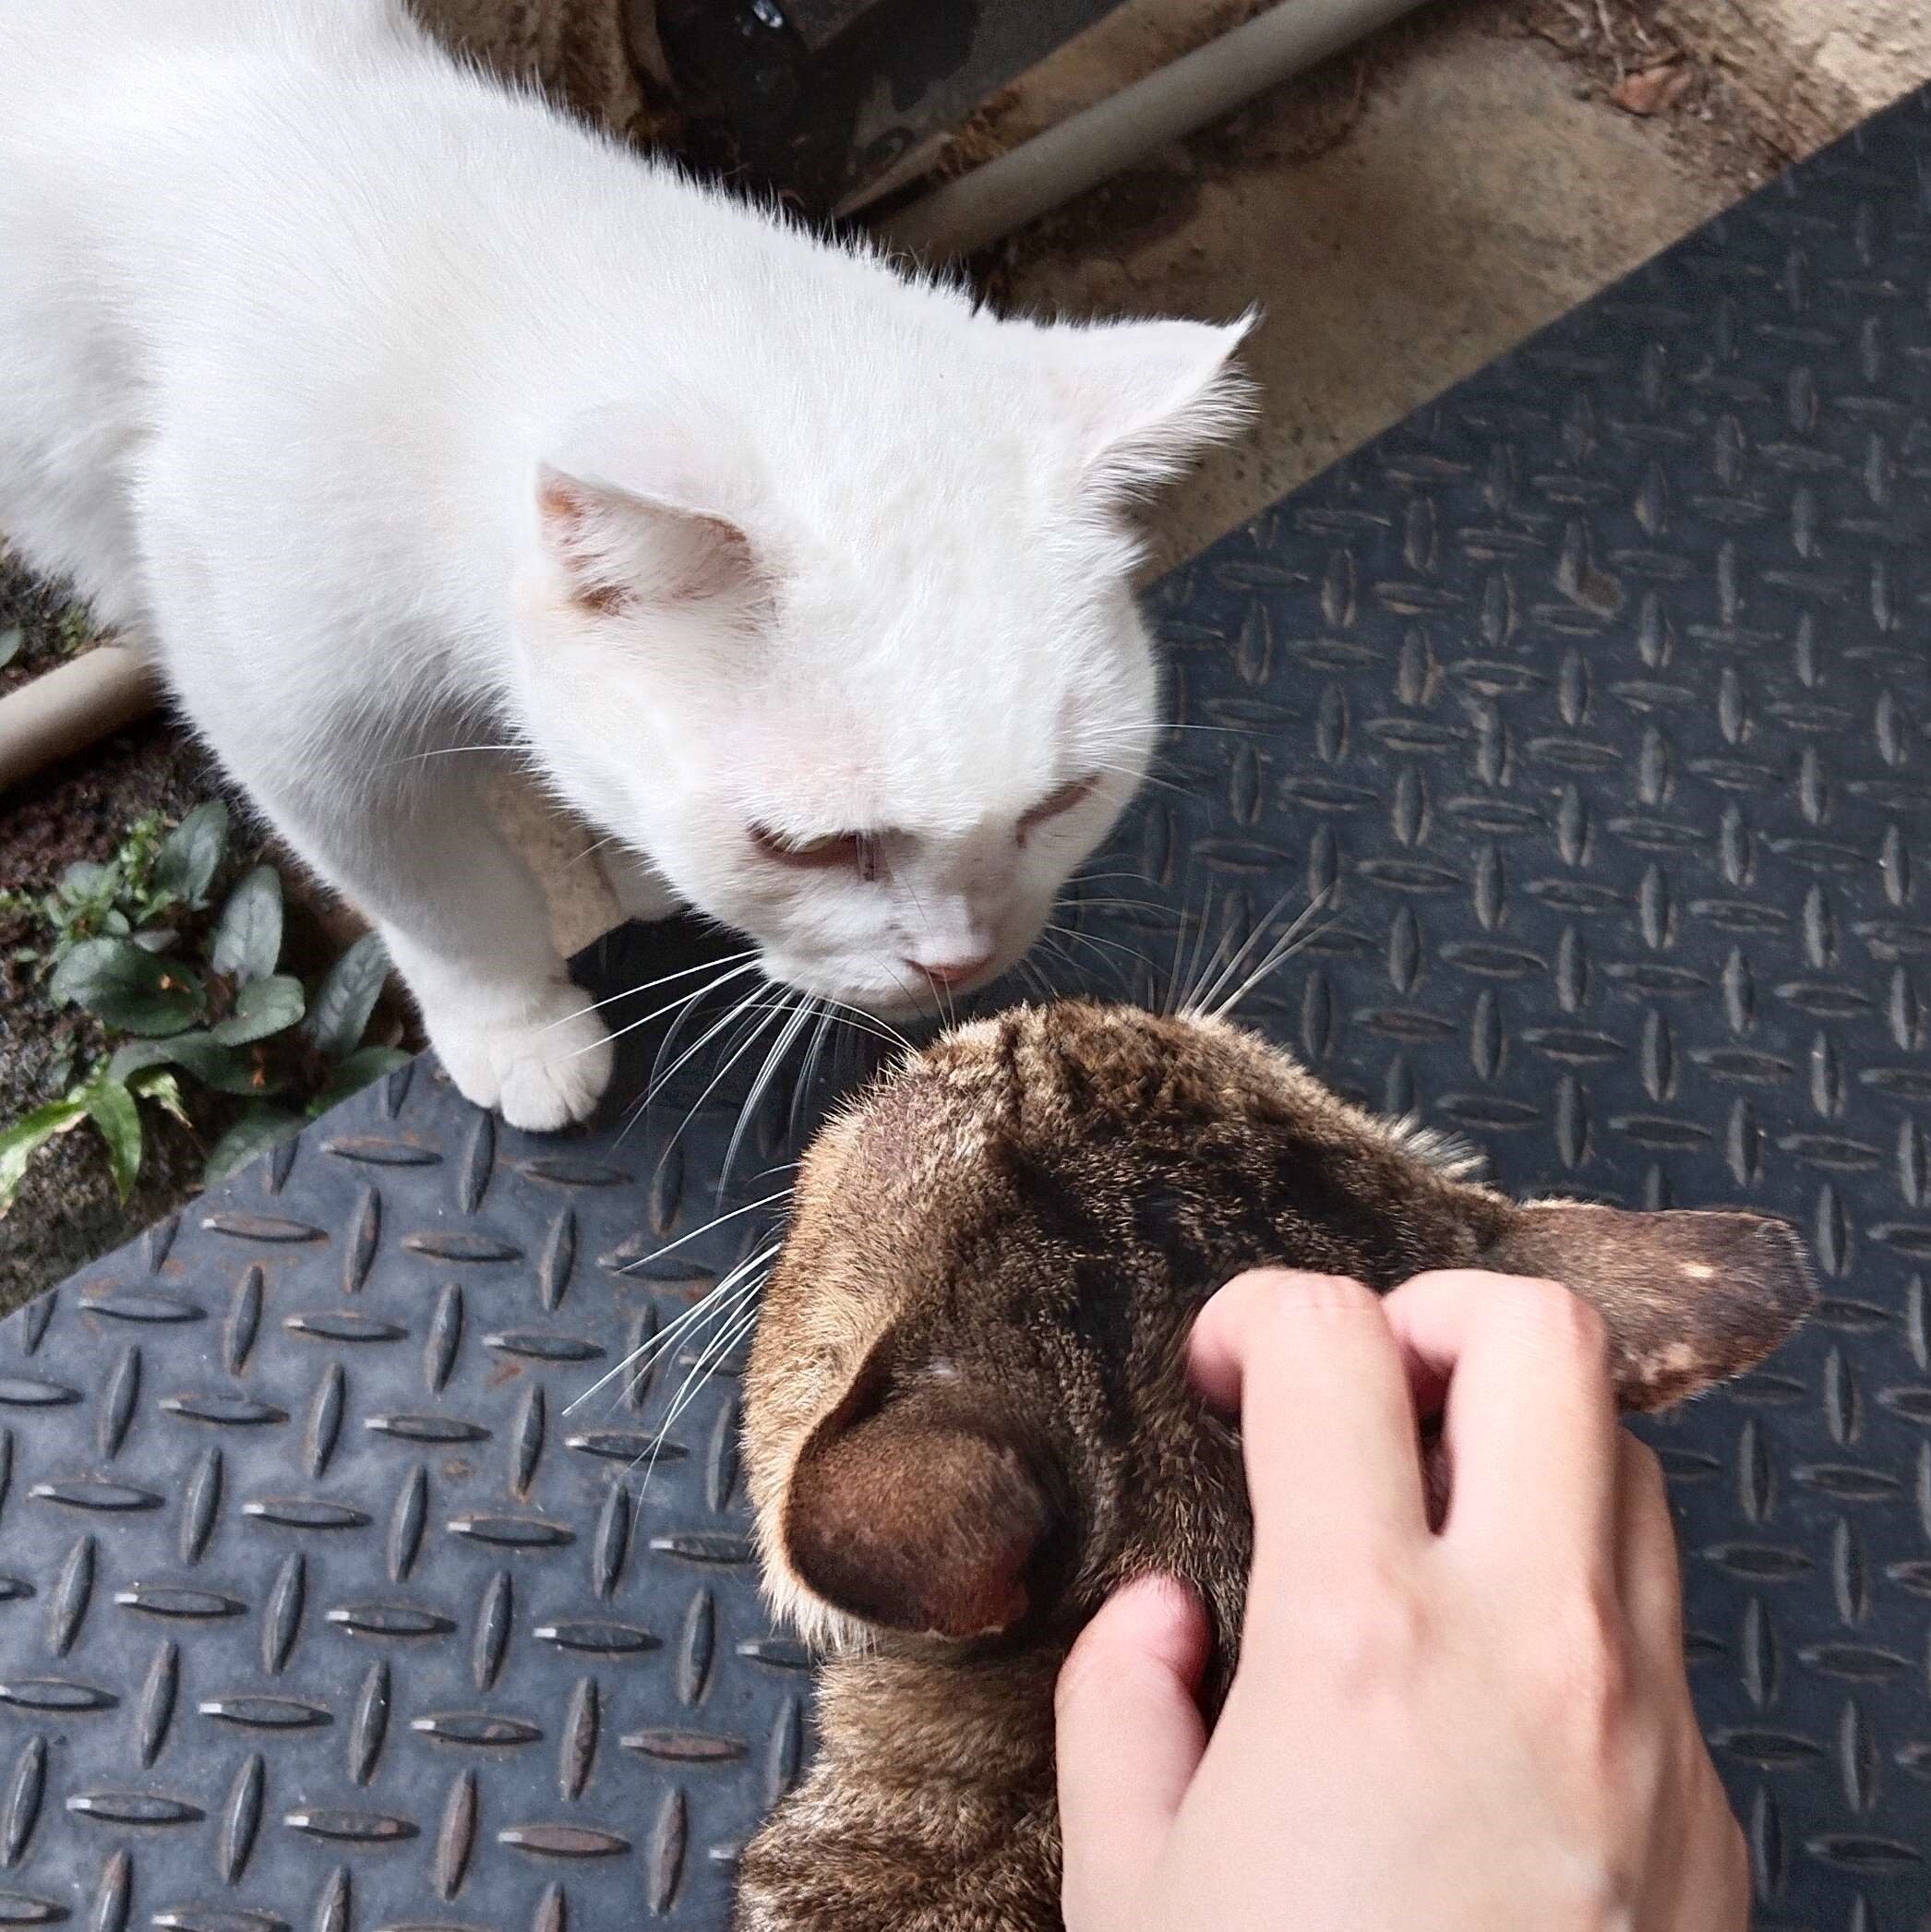 Soya (White kitty) & Bean (Brown tabby kitty)